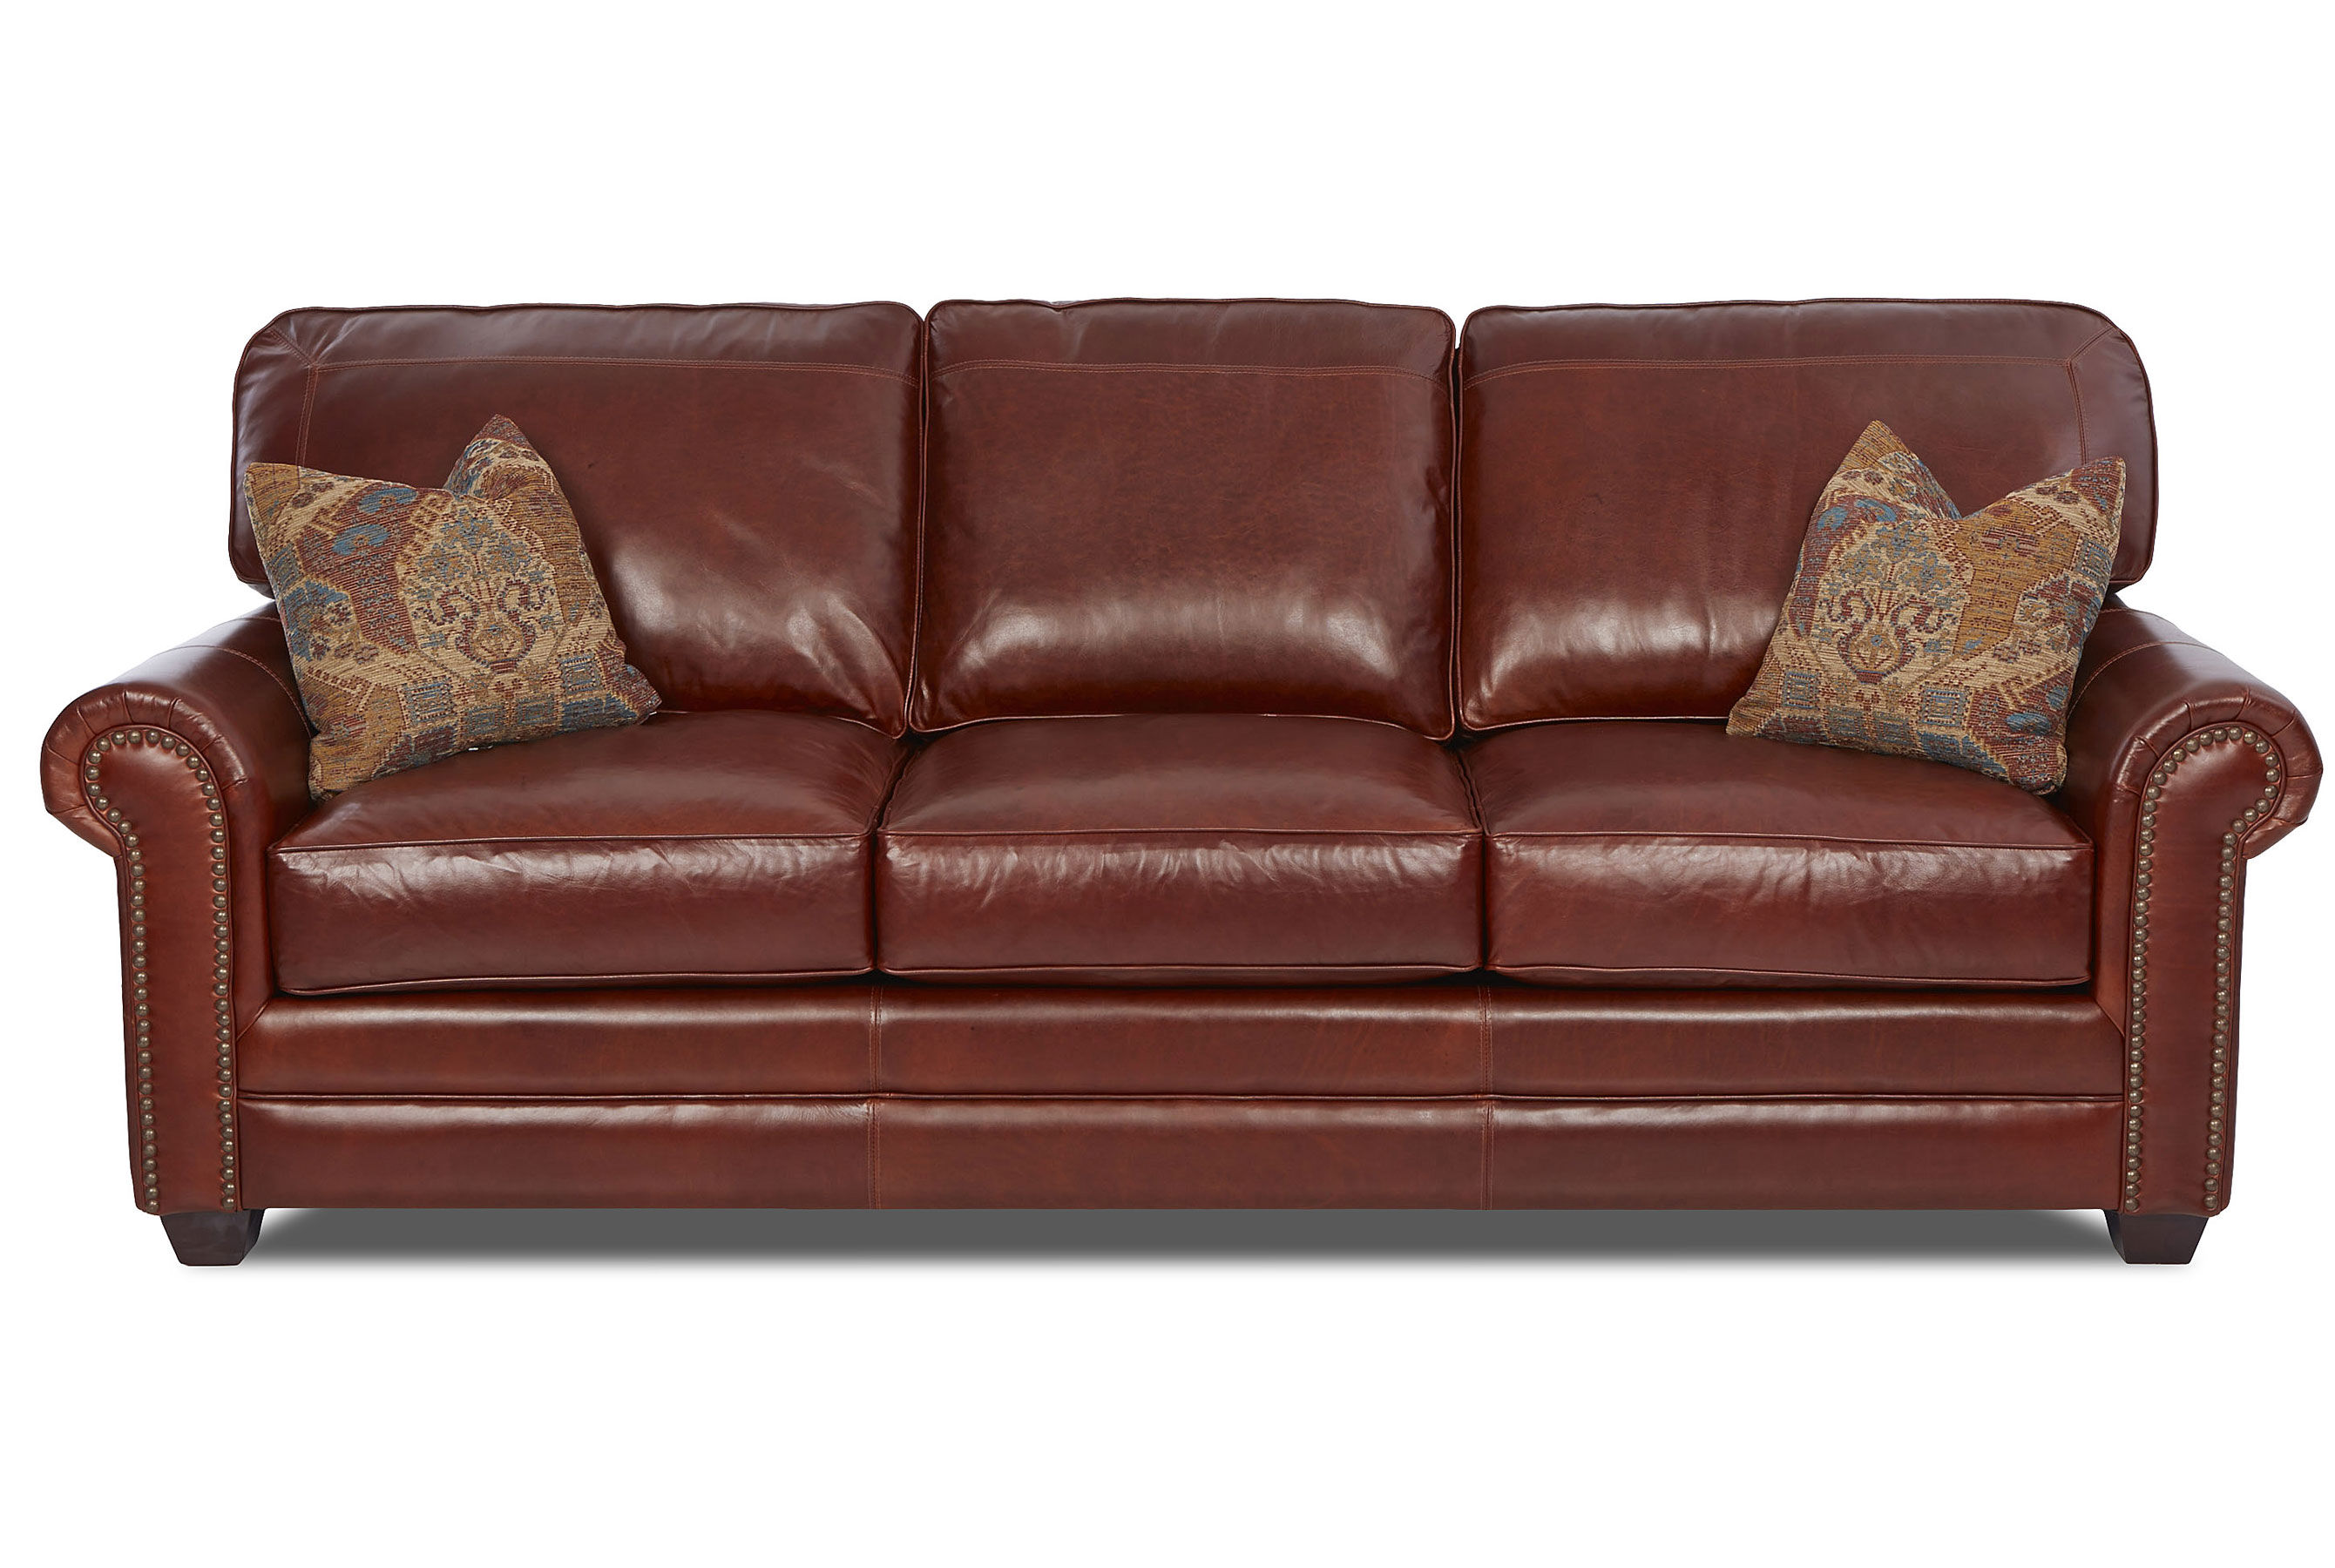 Epic Stationary Nailhead Leather Sofa